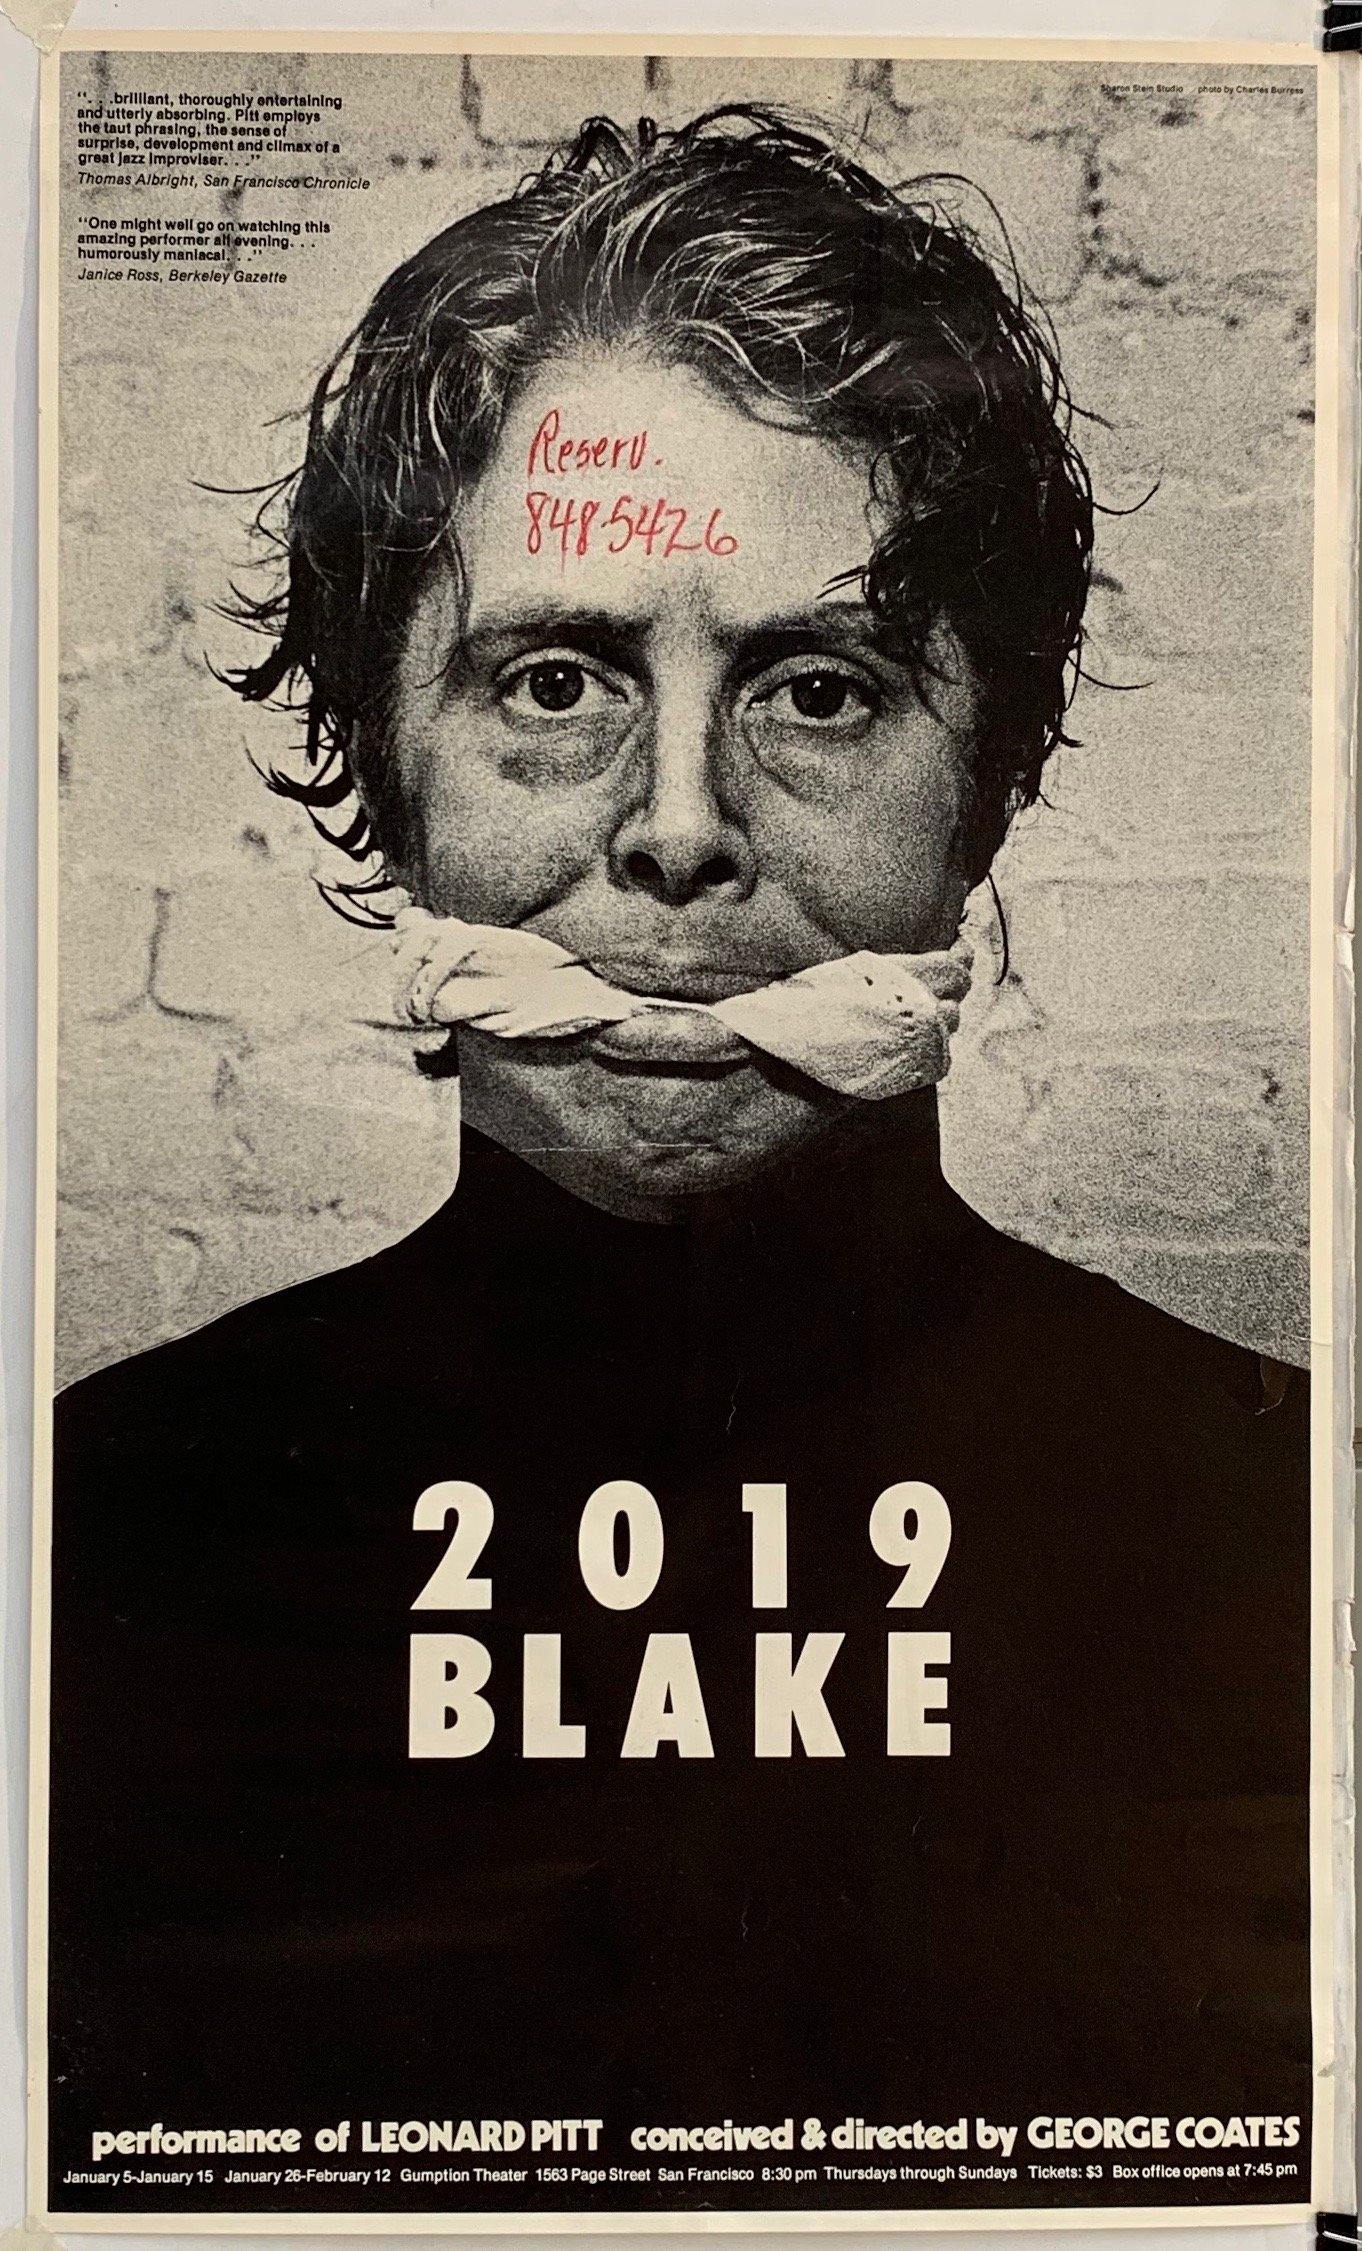 2019 Blake performance of Leonard Pitt